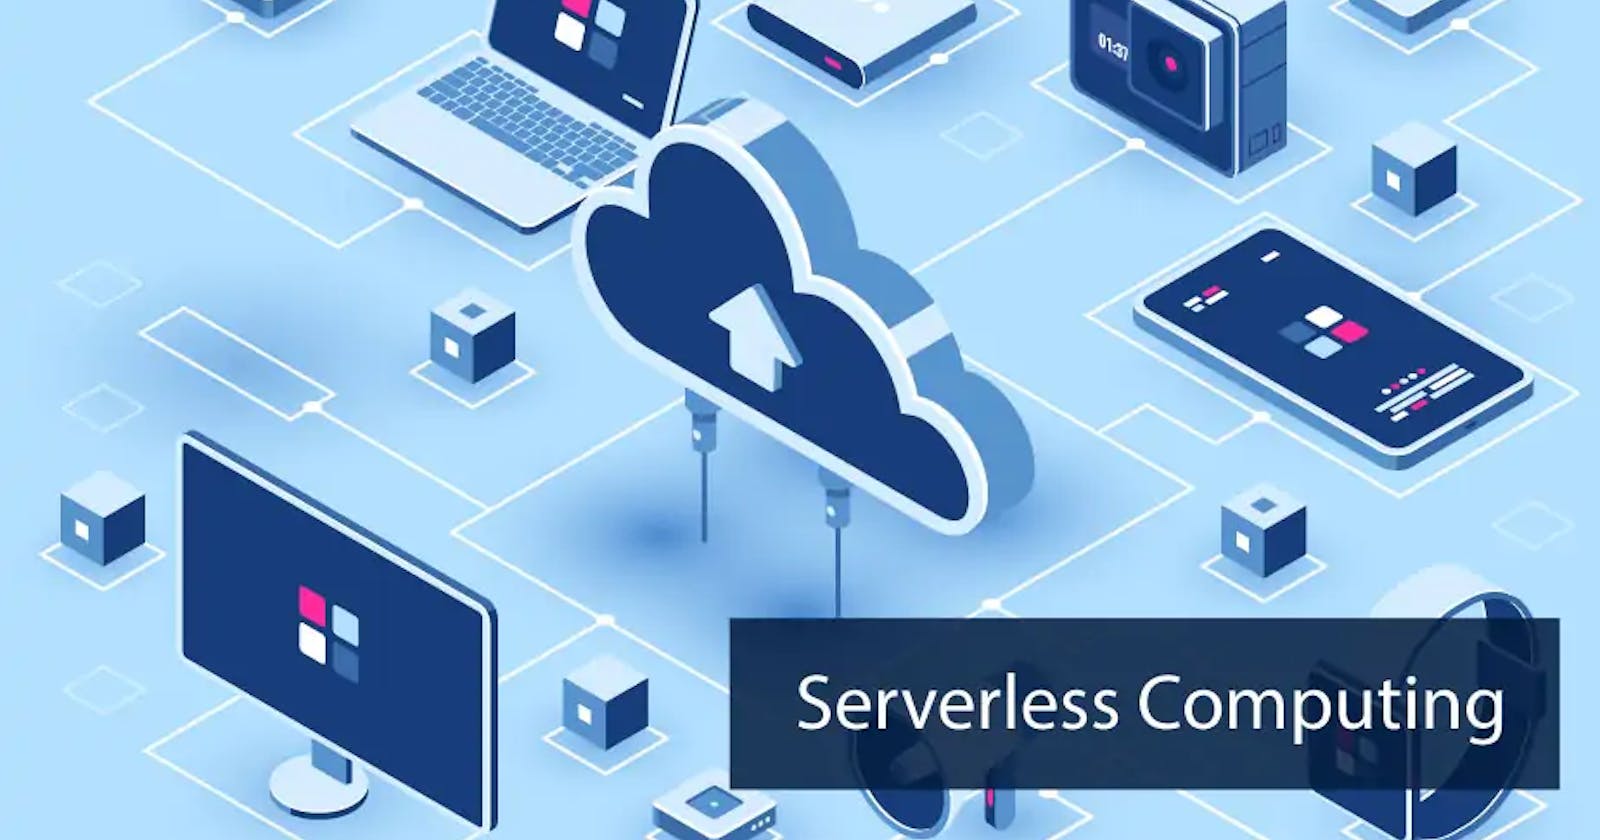 Fundamental concepts and principles of serverless computing